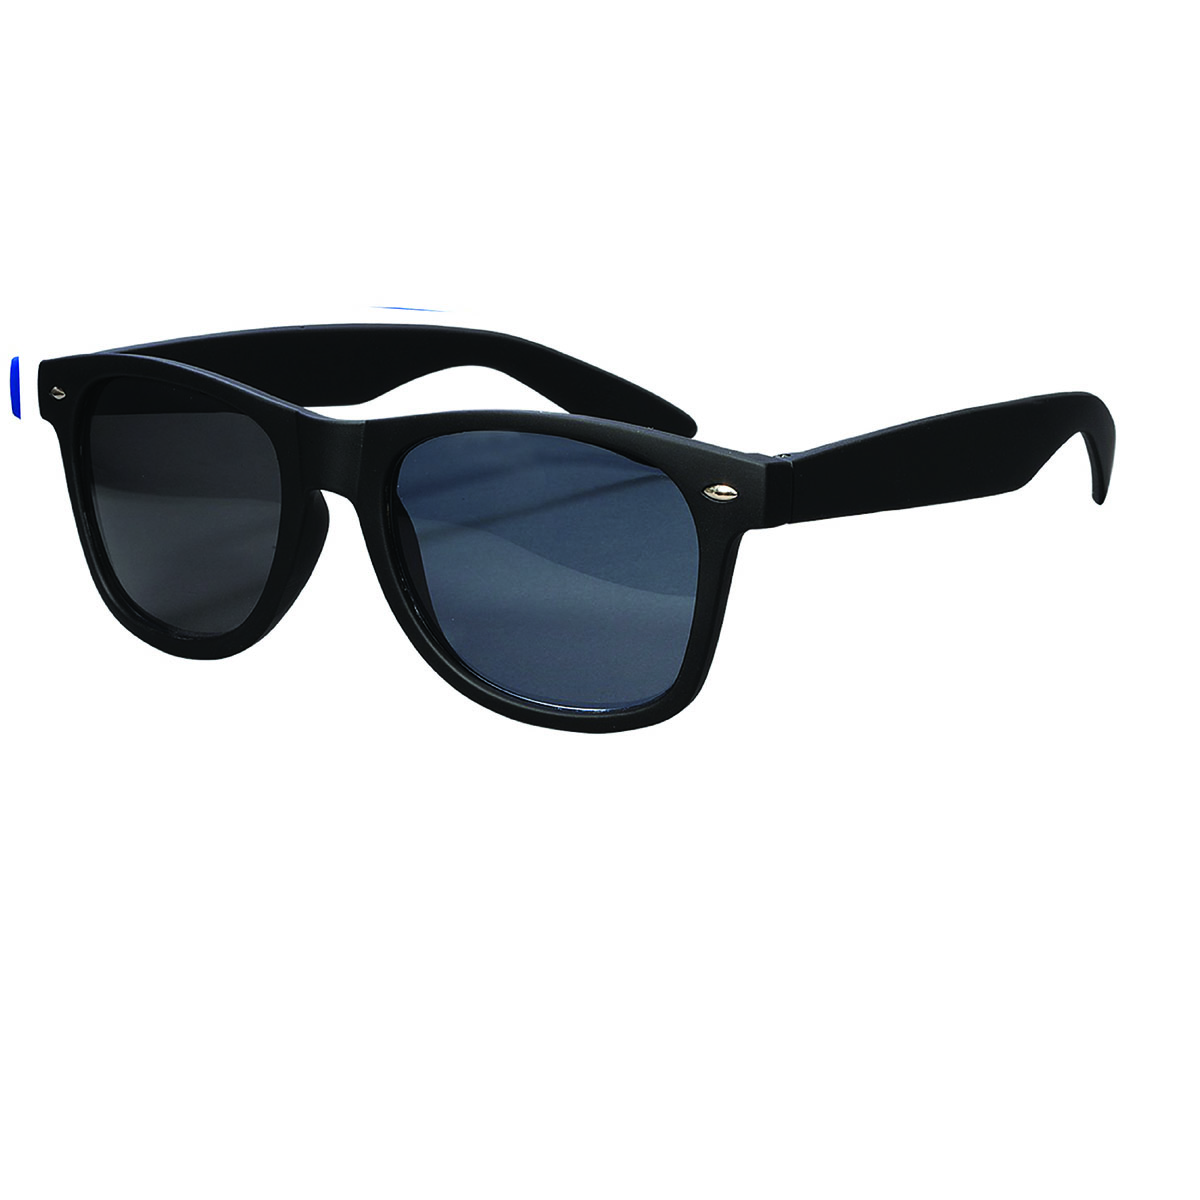 Black Rubberized Finish Fashion Sunglasses